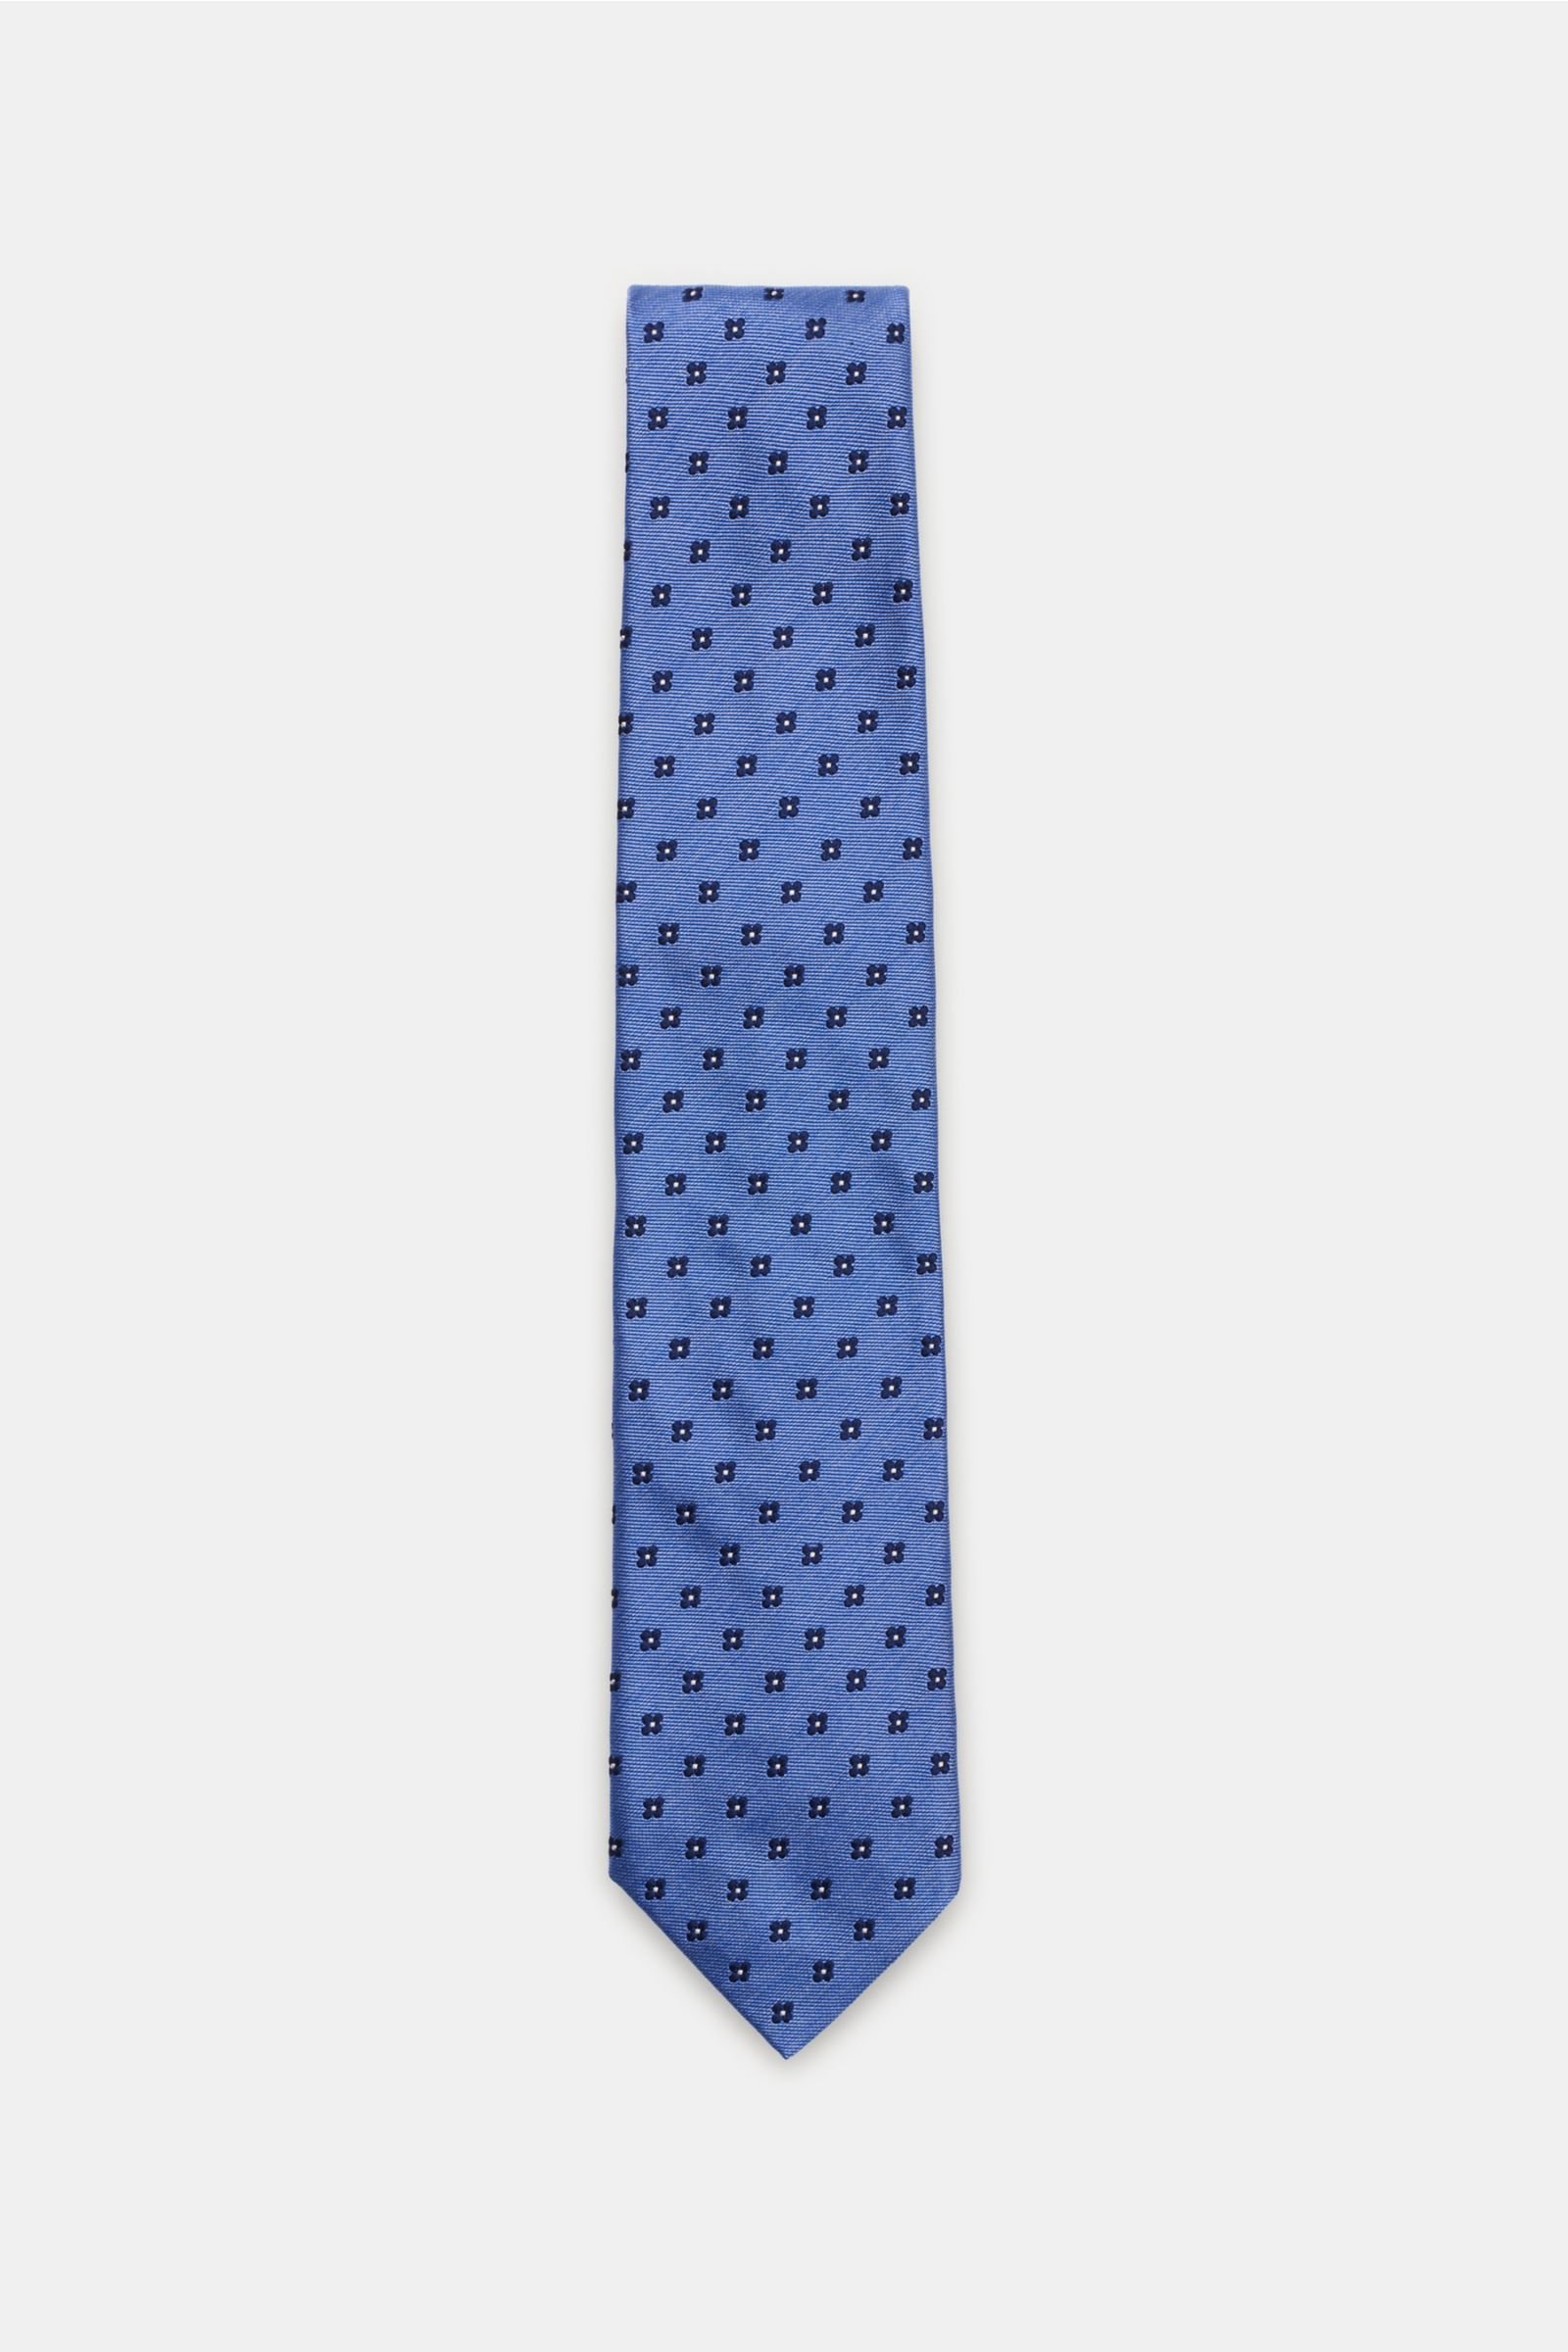 Silk tie smoky blue patterned